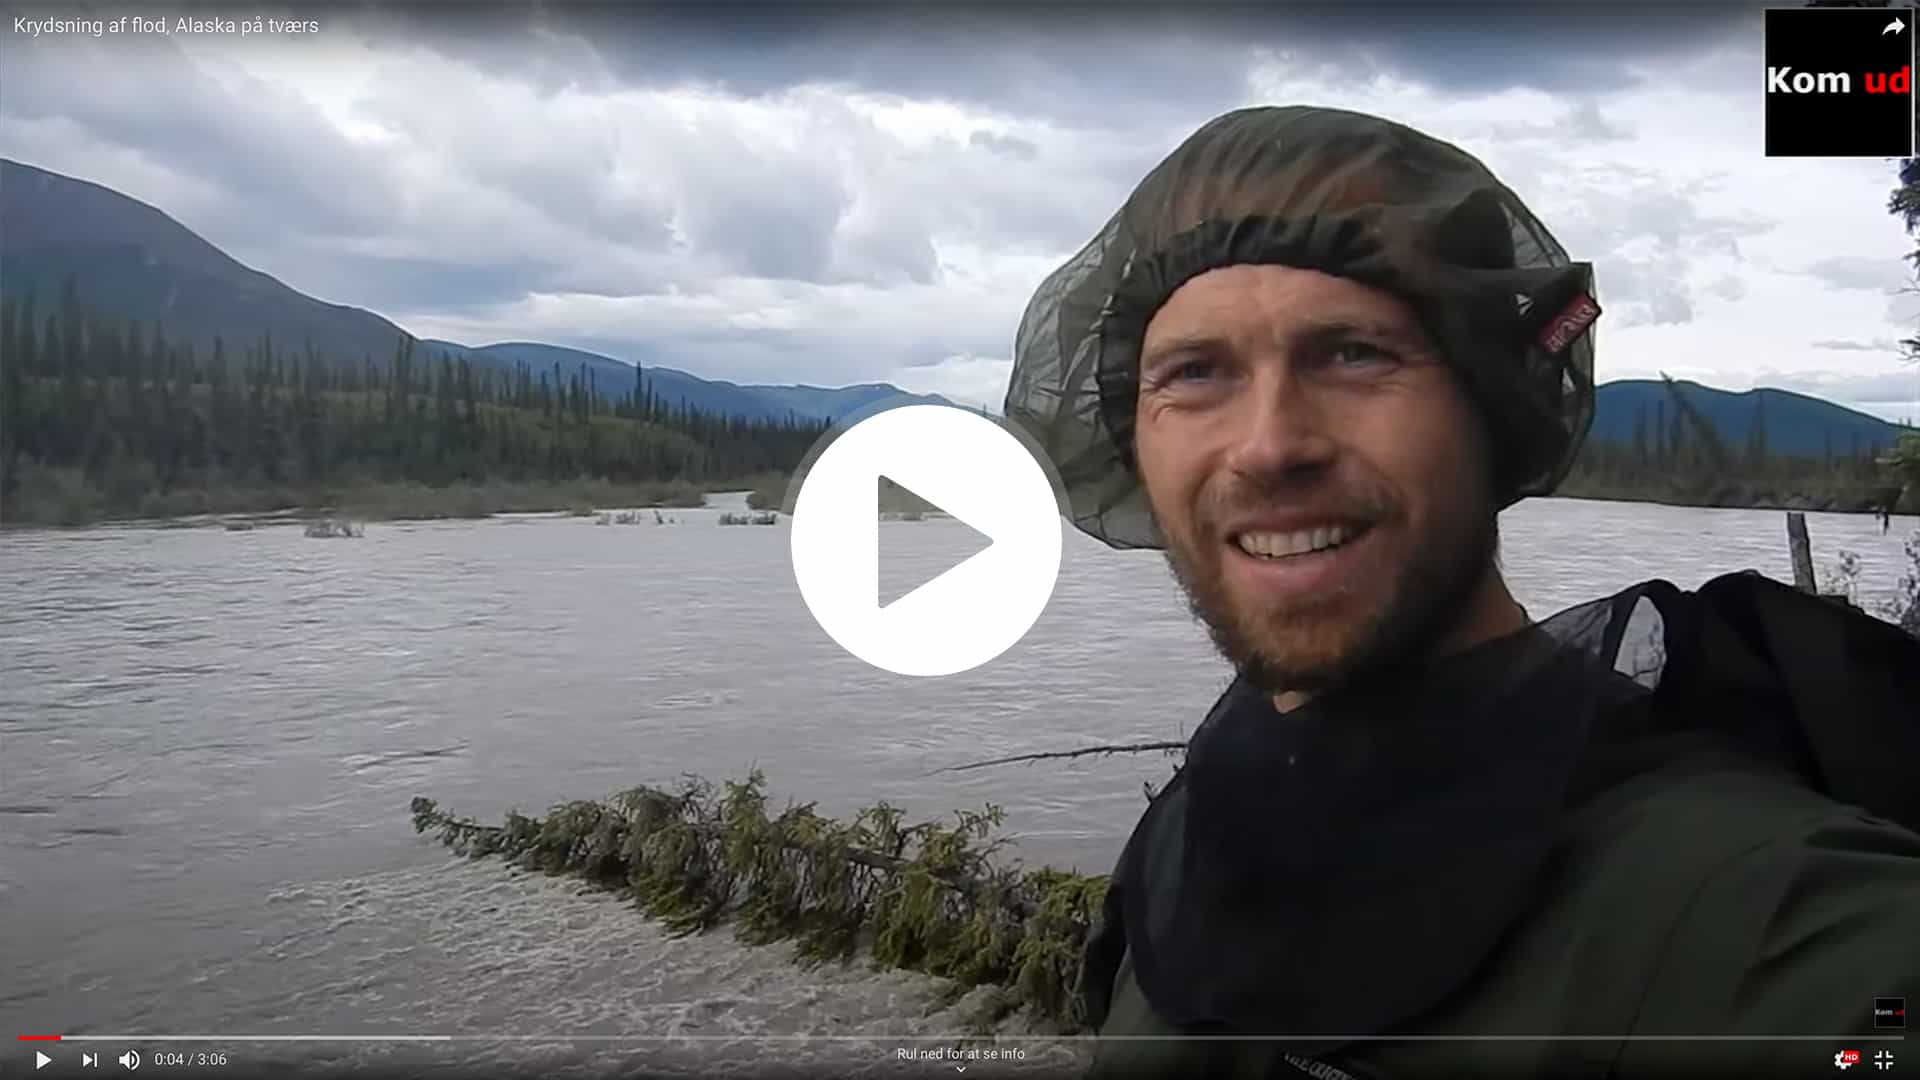 Alaska på tværs, foredrag, Erik B. Jørgensen, Flodkrydsning, YouTube film